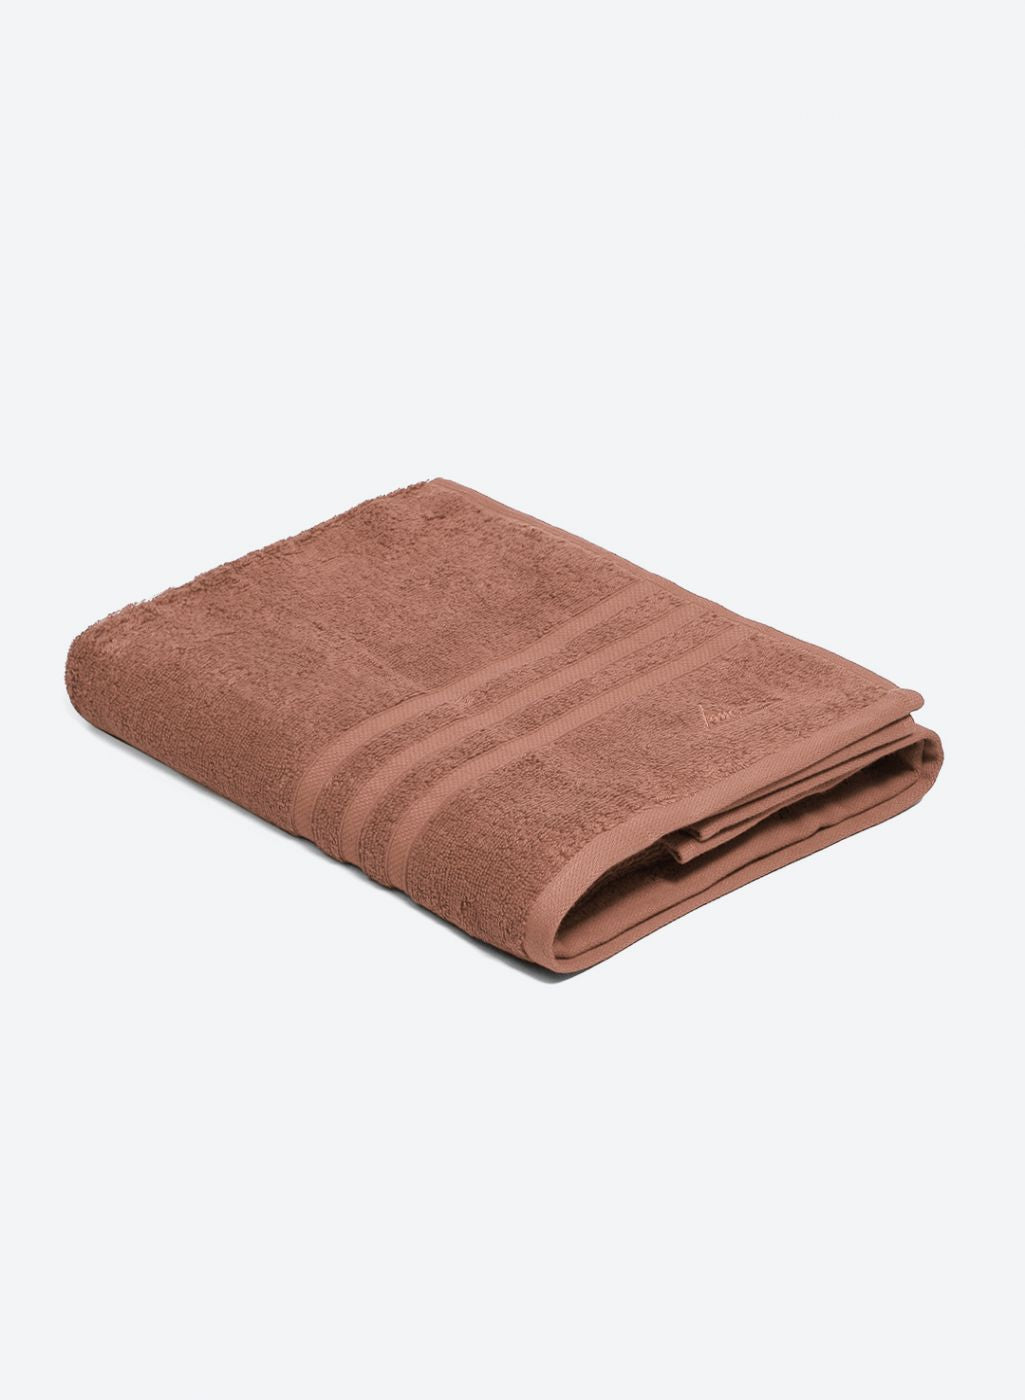 Peach Cotton 525 GSM Bath Towel